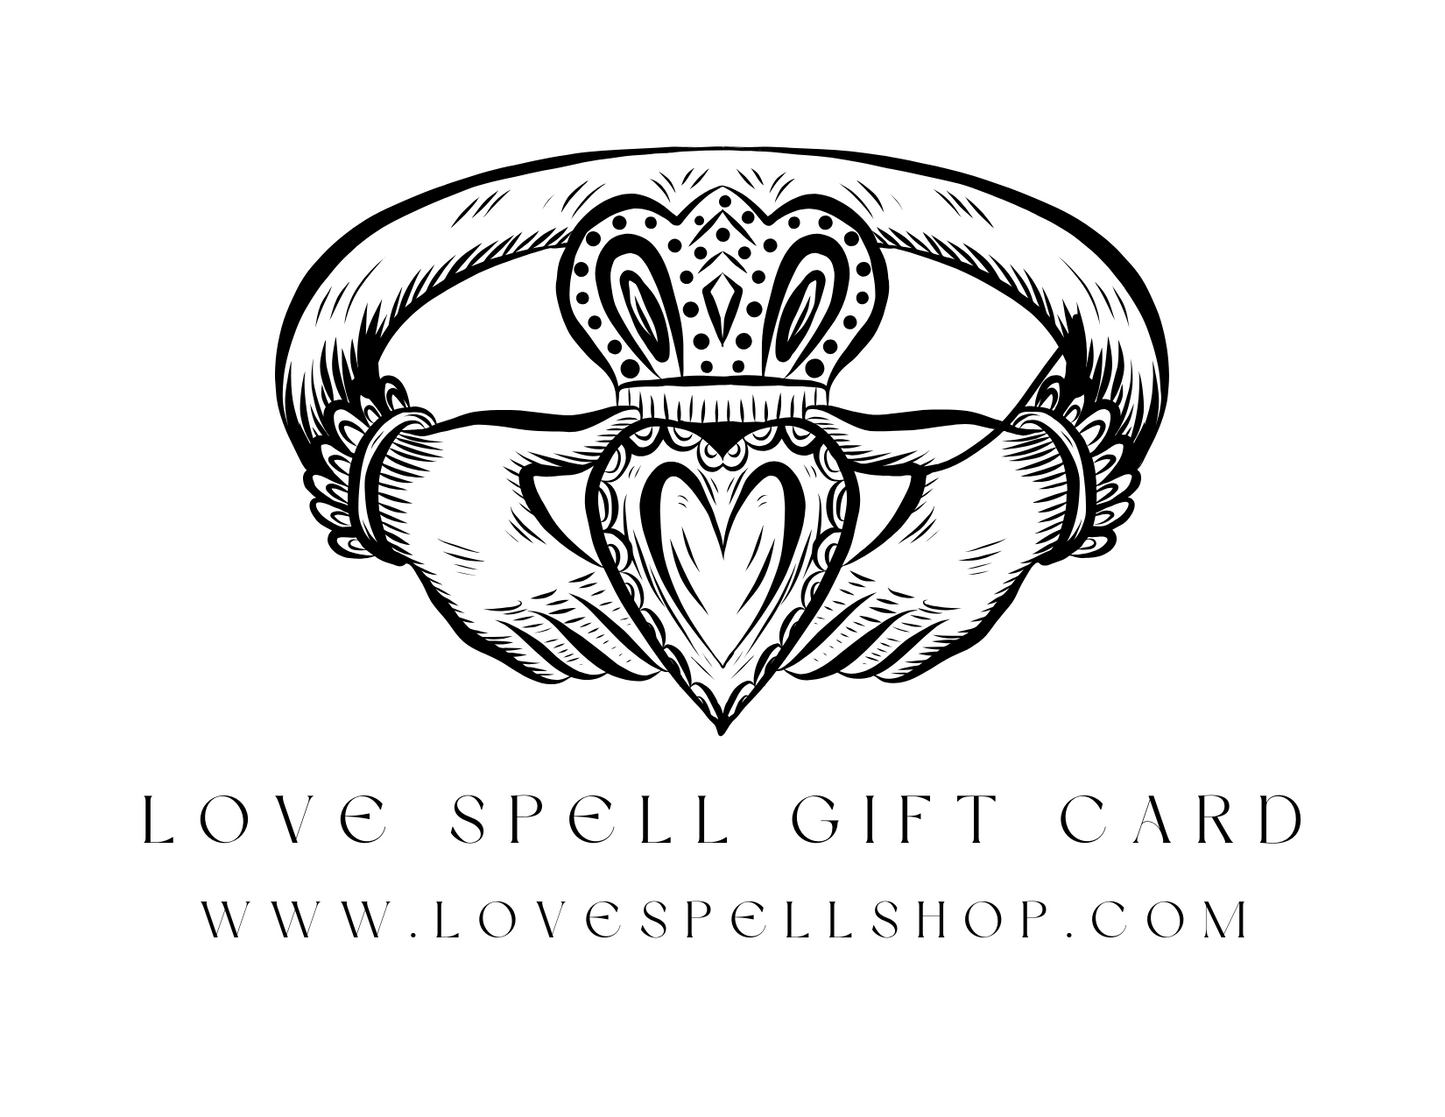 Love Spell Digital Gift Card (Claddagh Ring)